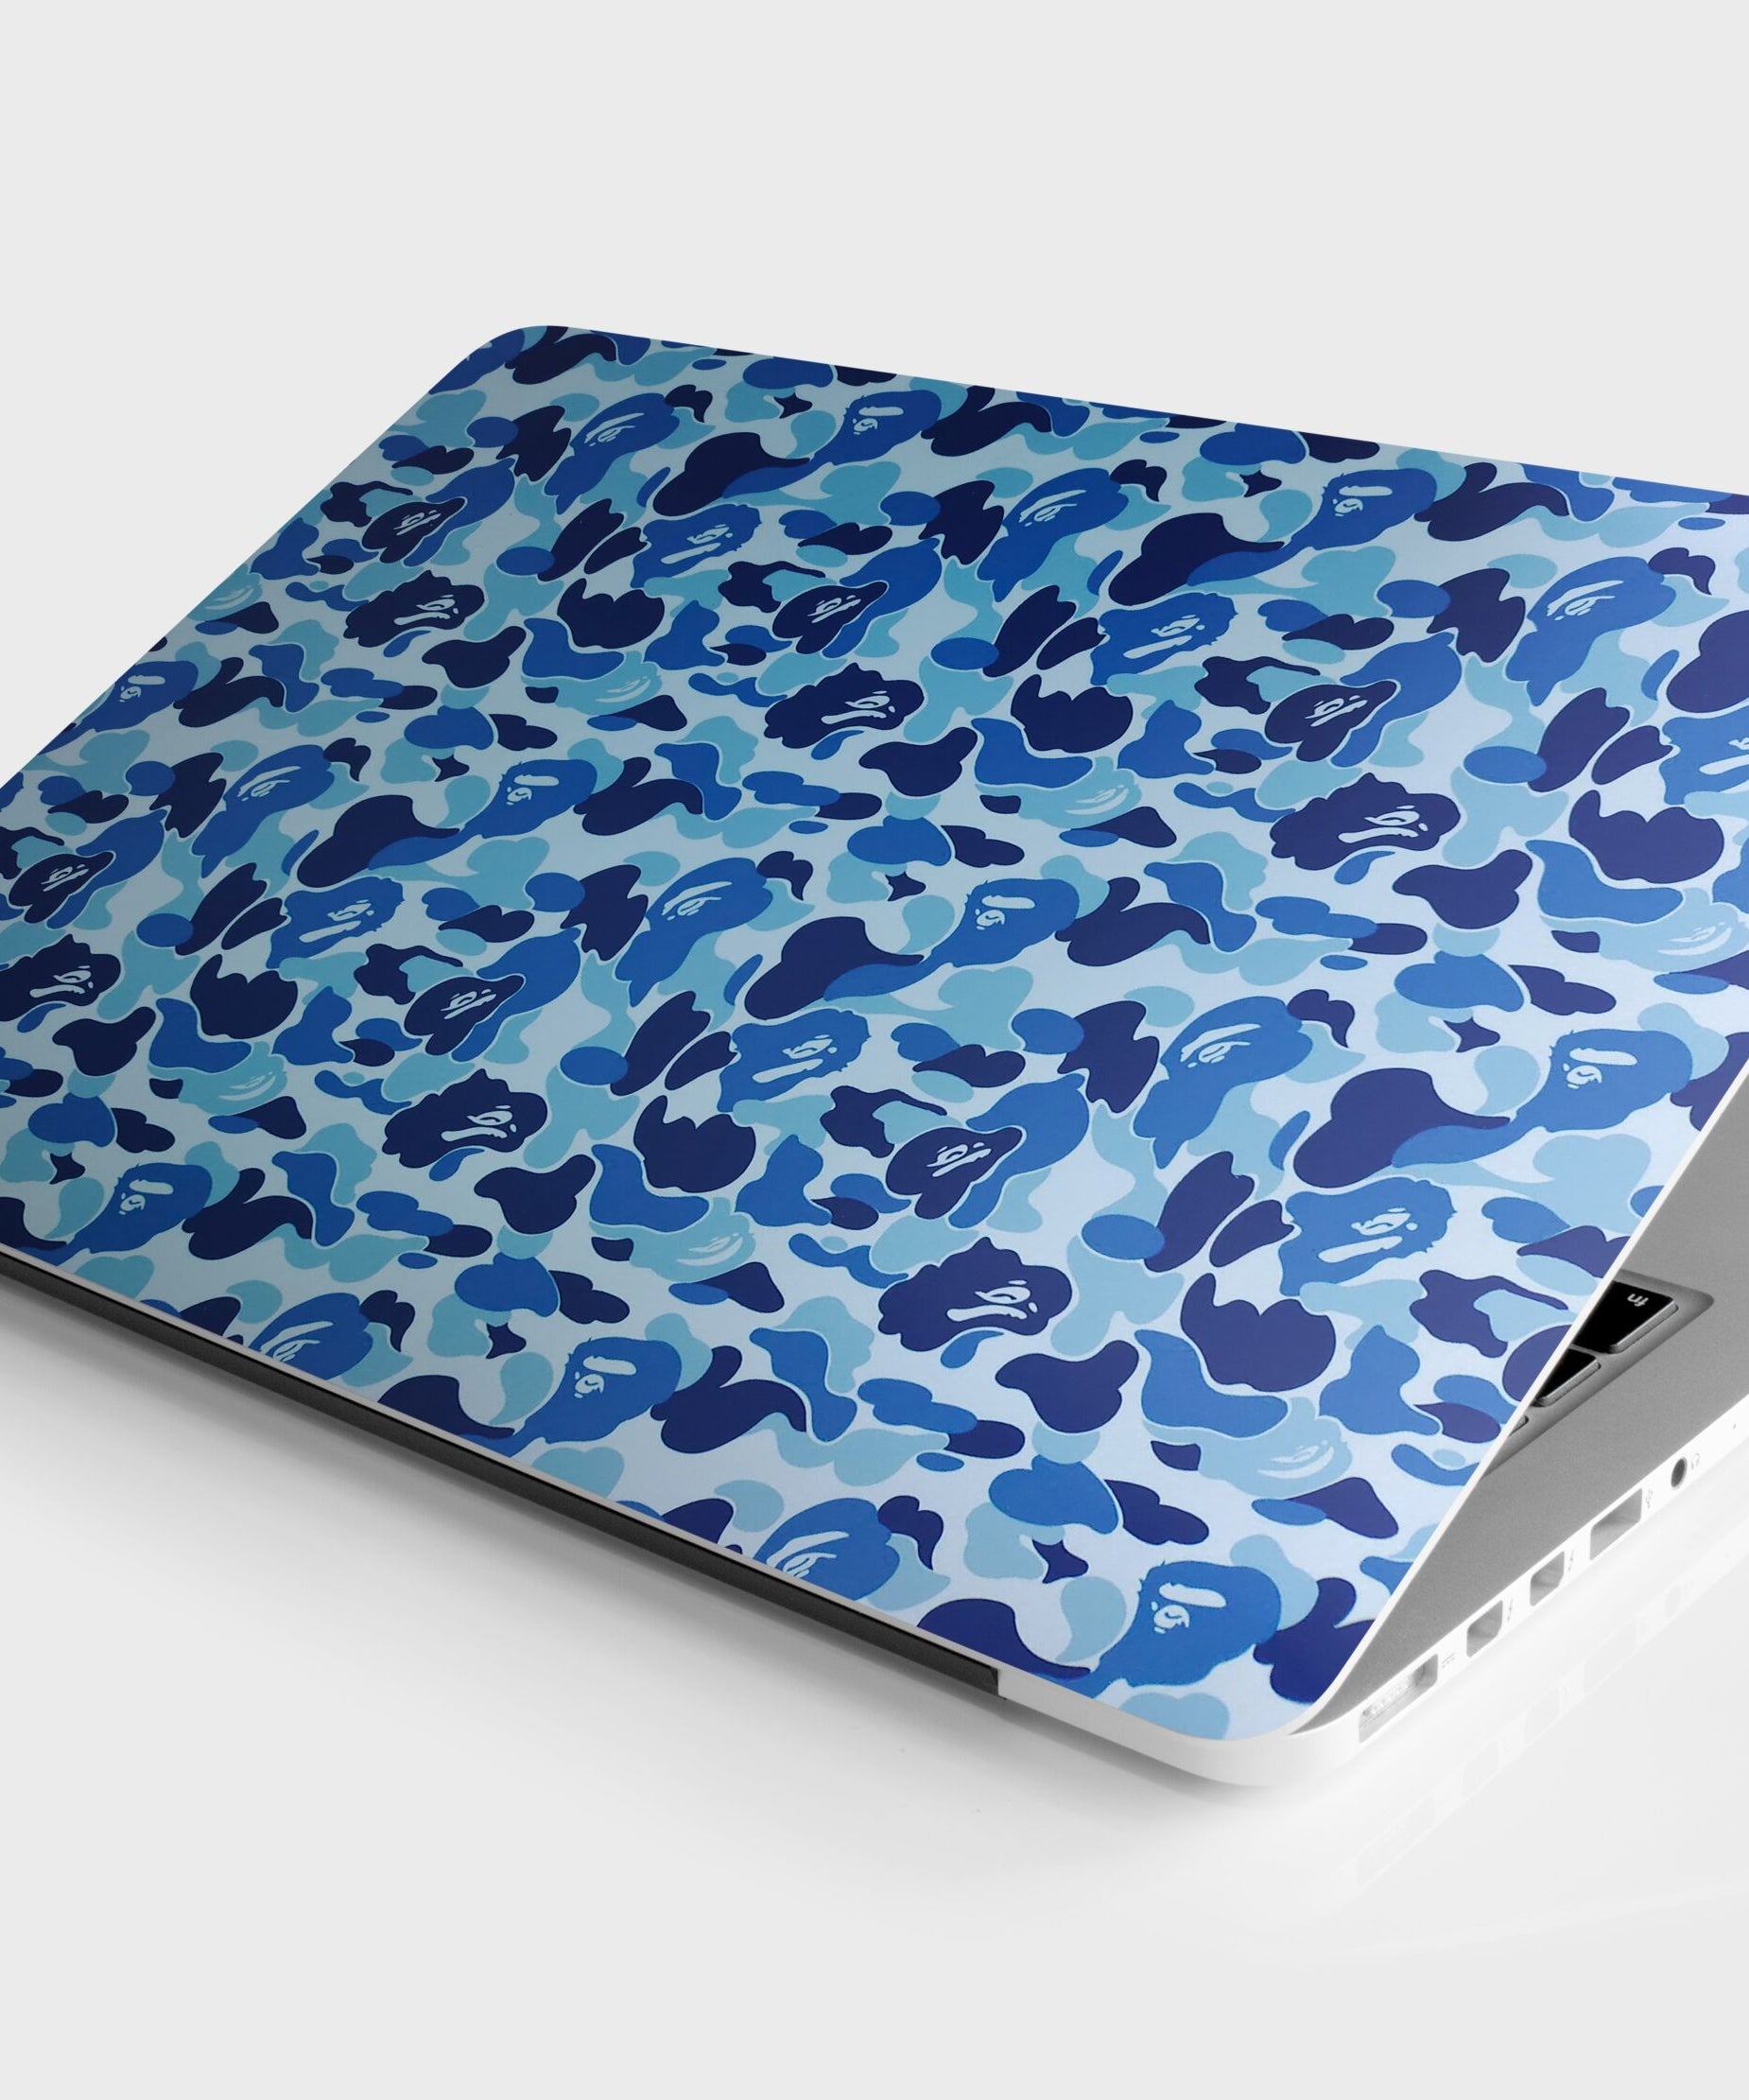 Blue Camo Laptop Skin